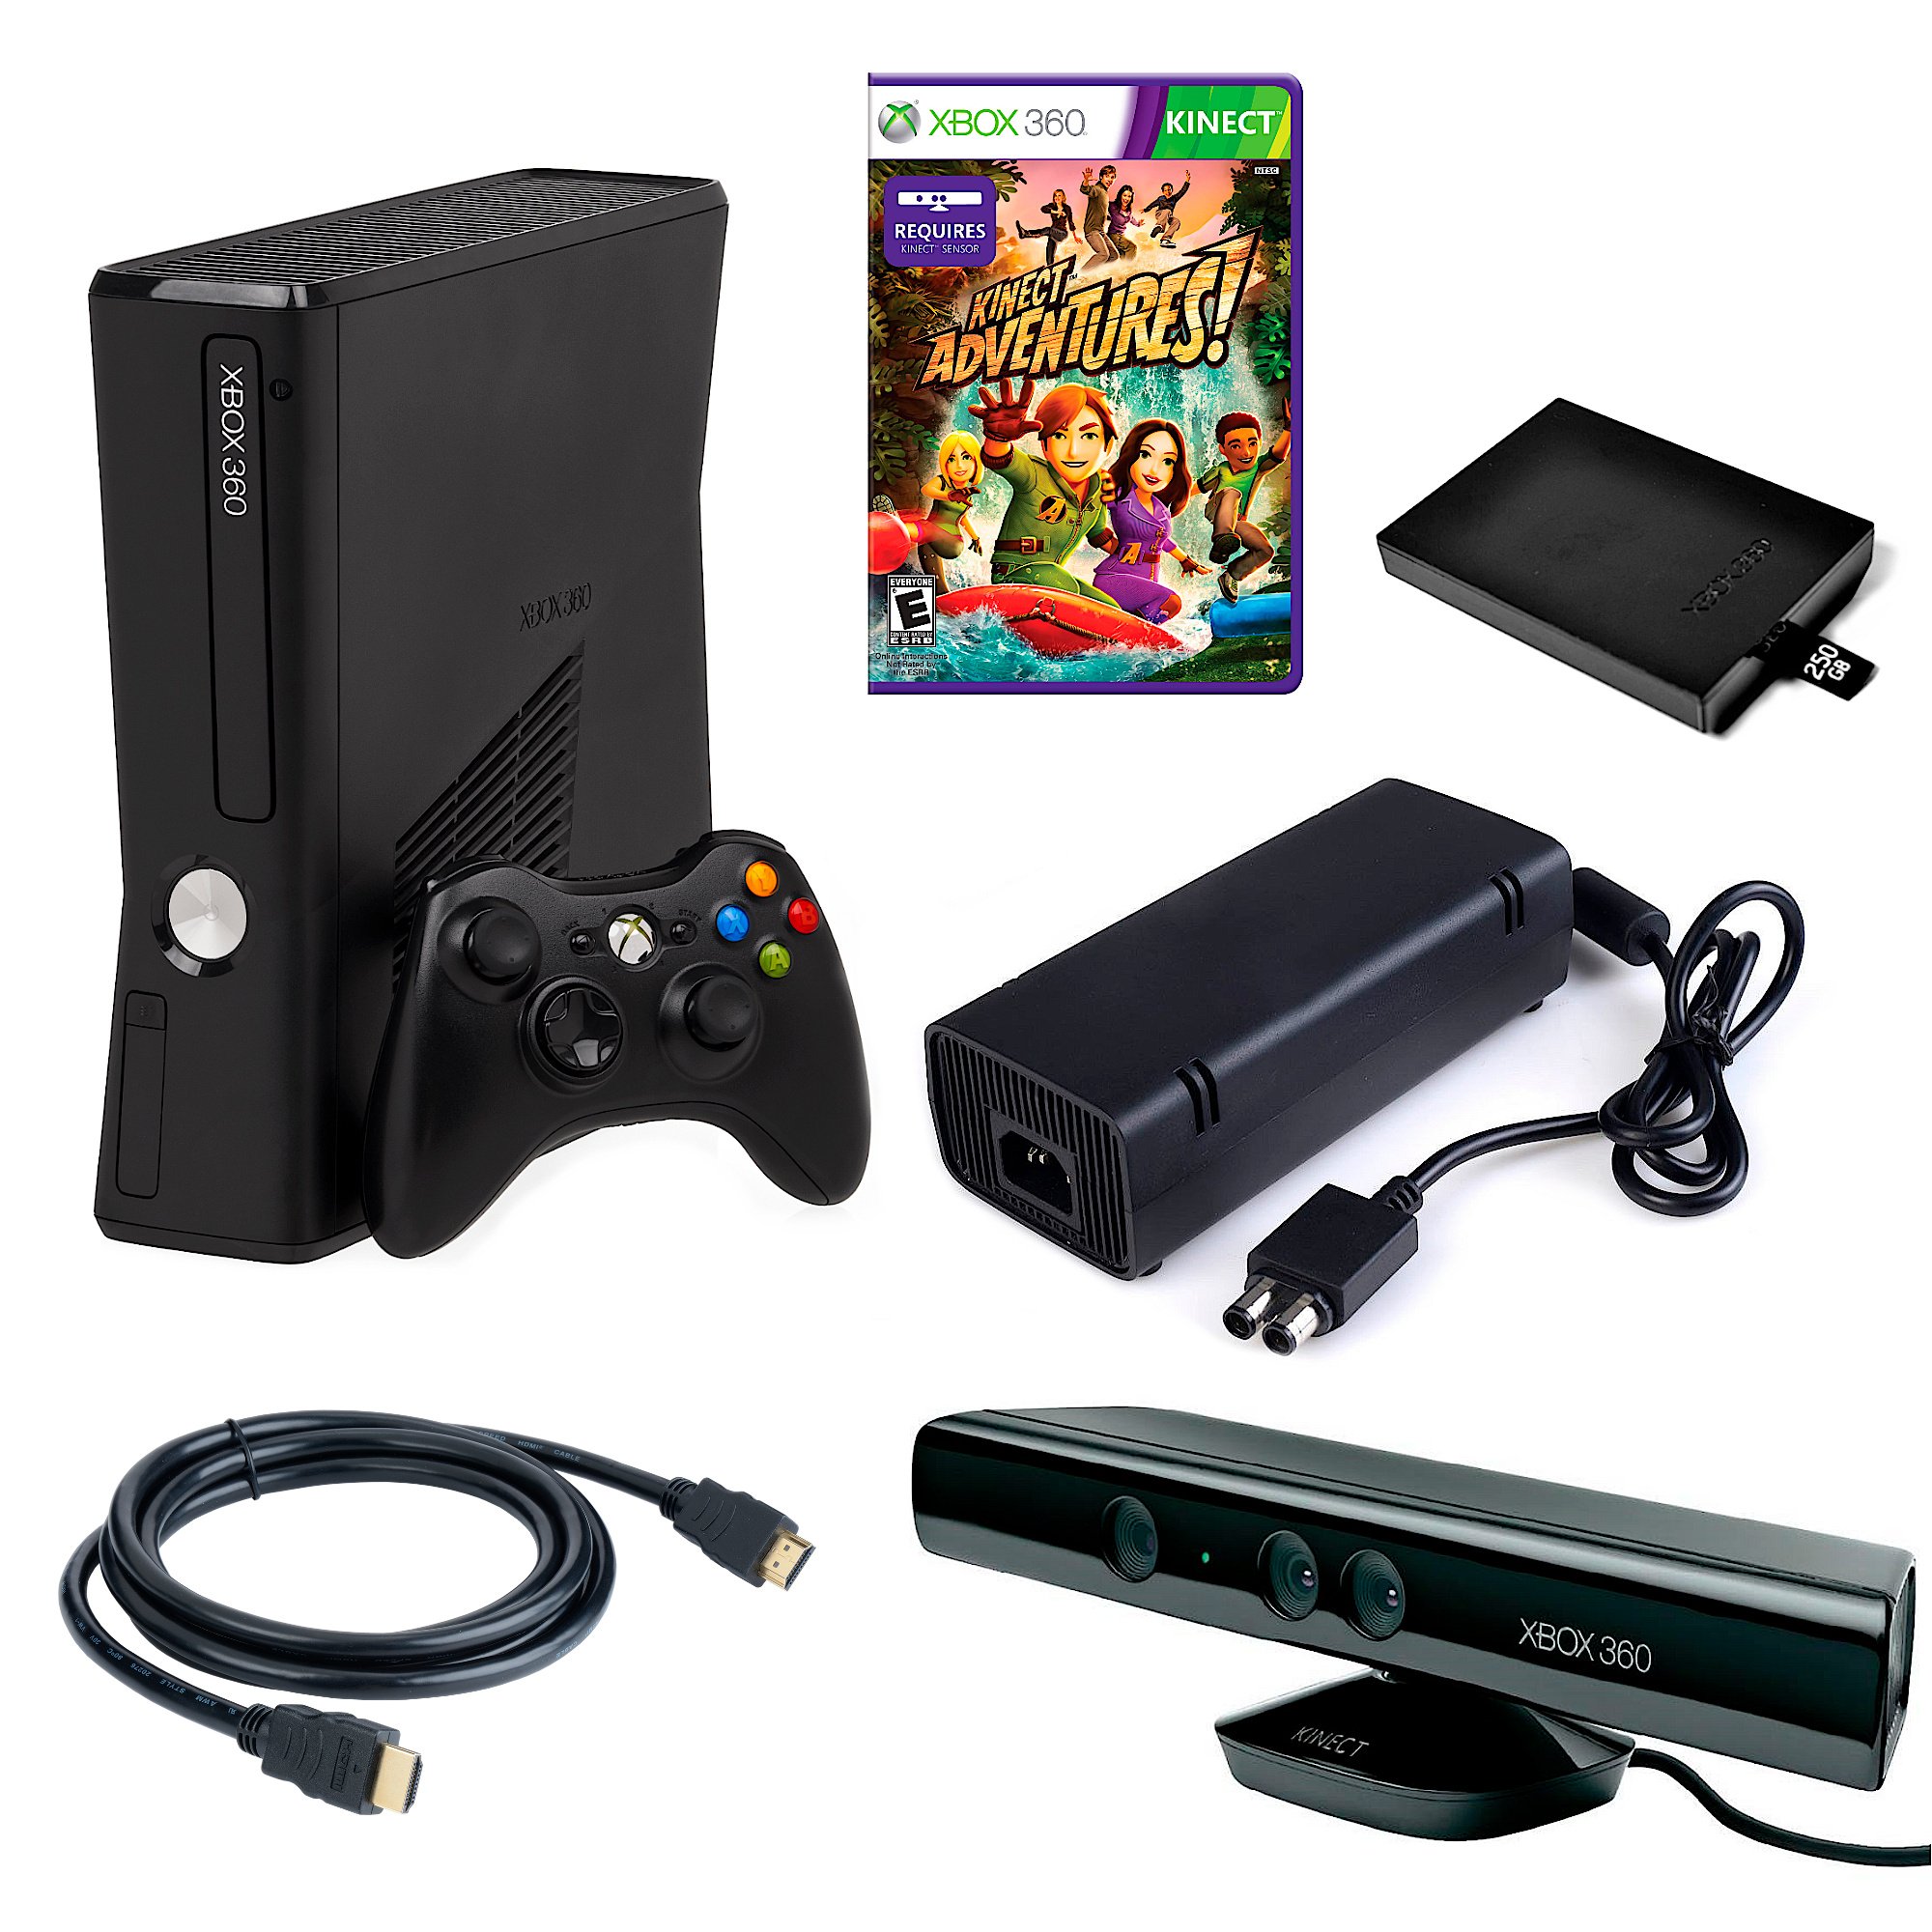 Dwars zitten Veroorloven smokkel Authentic Xbox 360 Console + Controller + Cords + Pick Your Bundle, USA  Shipping | eBay